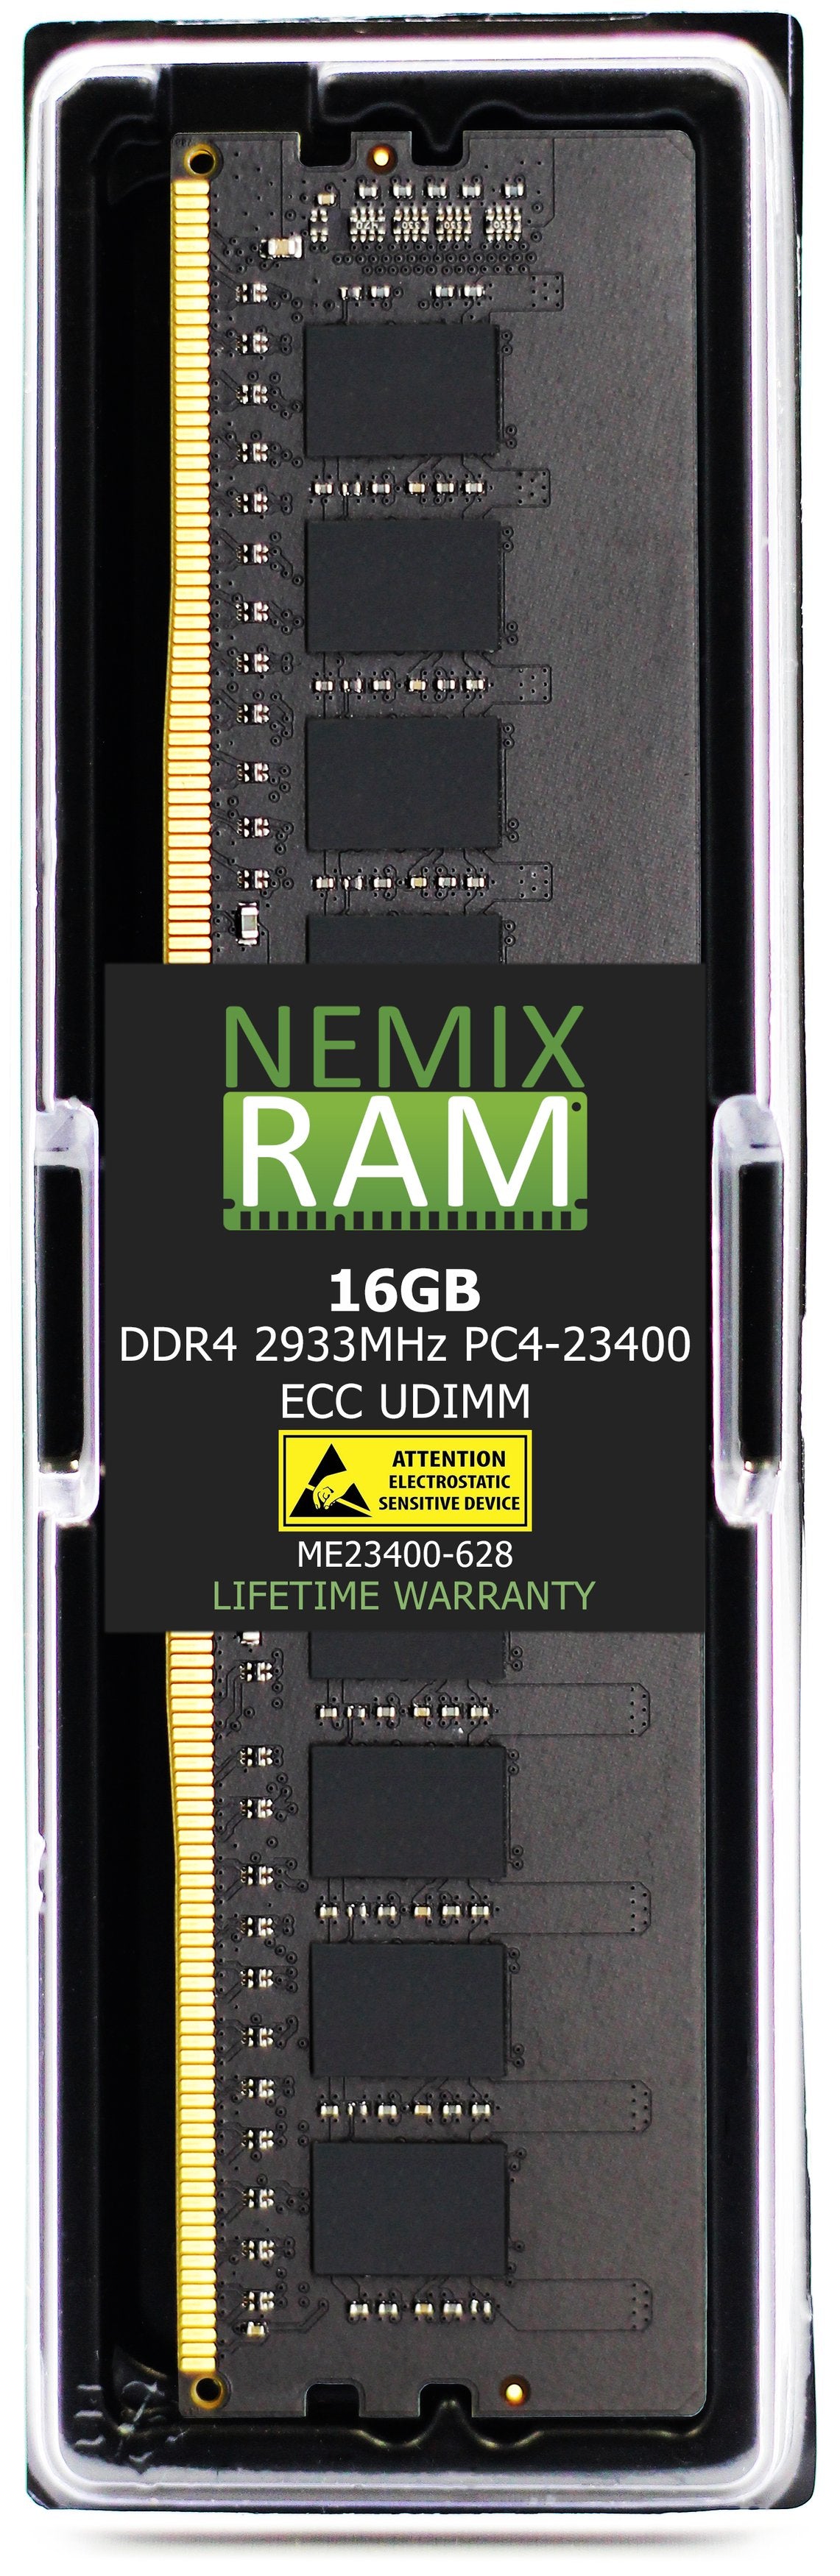 16GB DDR4 2933MHZ PC4-23400 ECC UDIMM Compatible with Supermicro MEM-DR416L-SL01-EU29